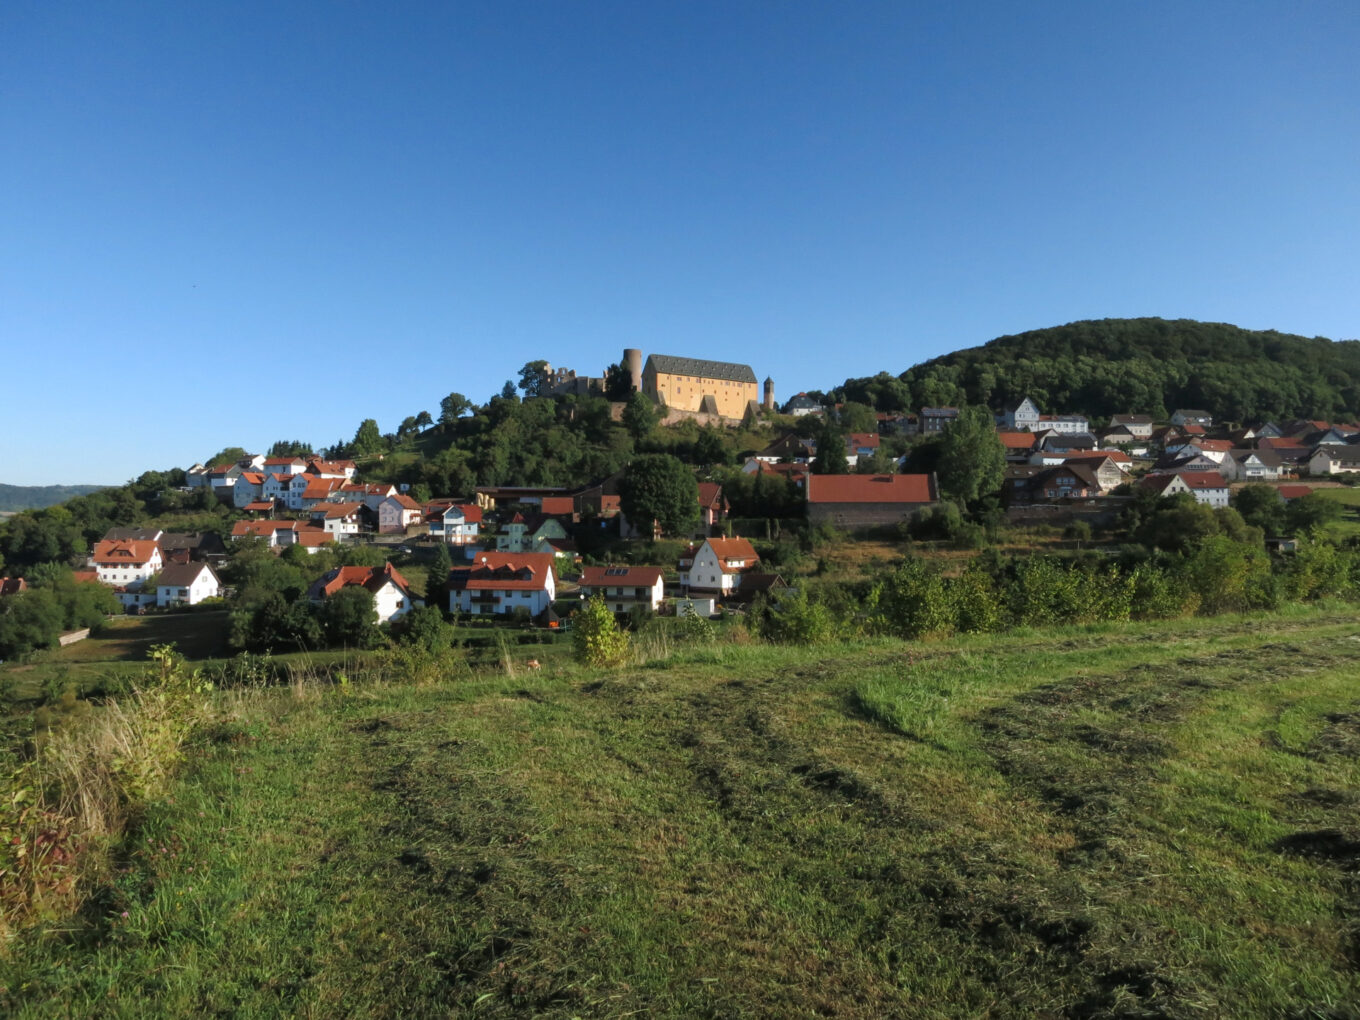 Ruins of Schwarzenfels Castle, view from a distance